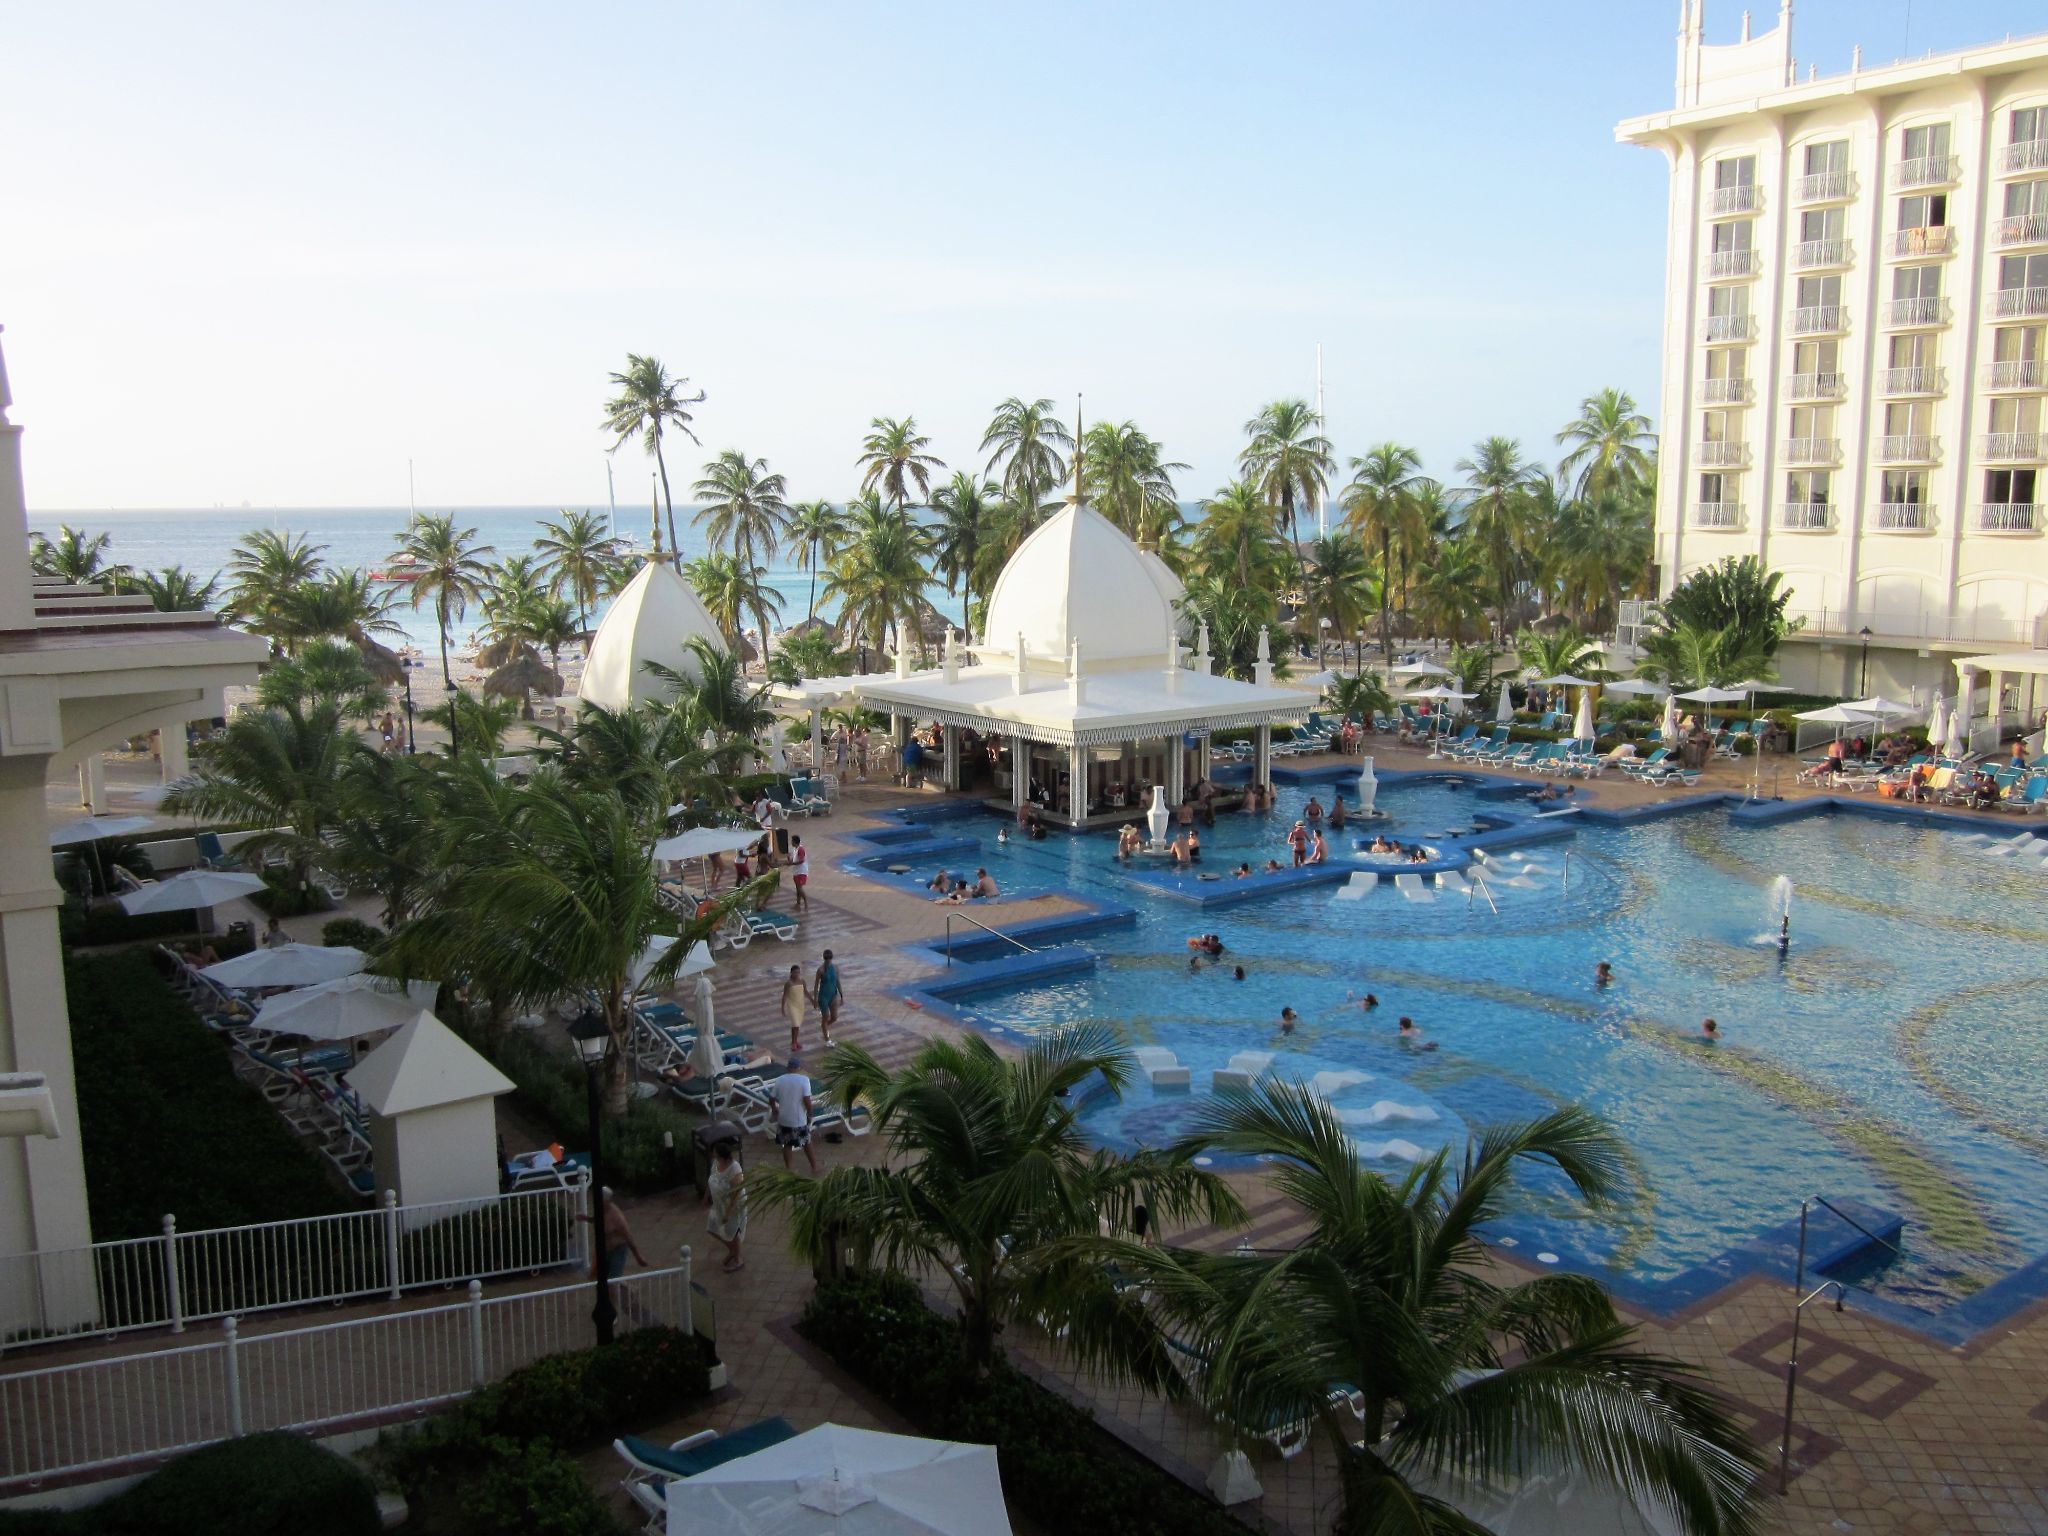 Upscale hotel pool